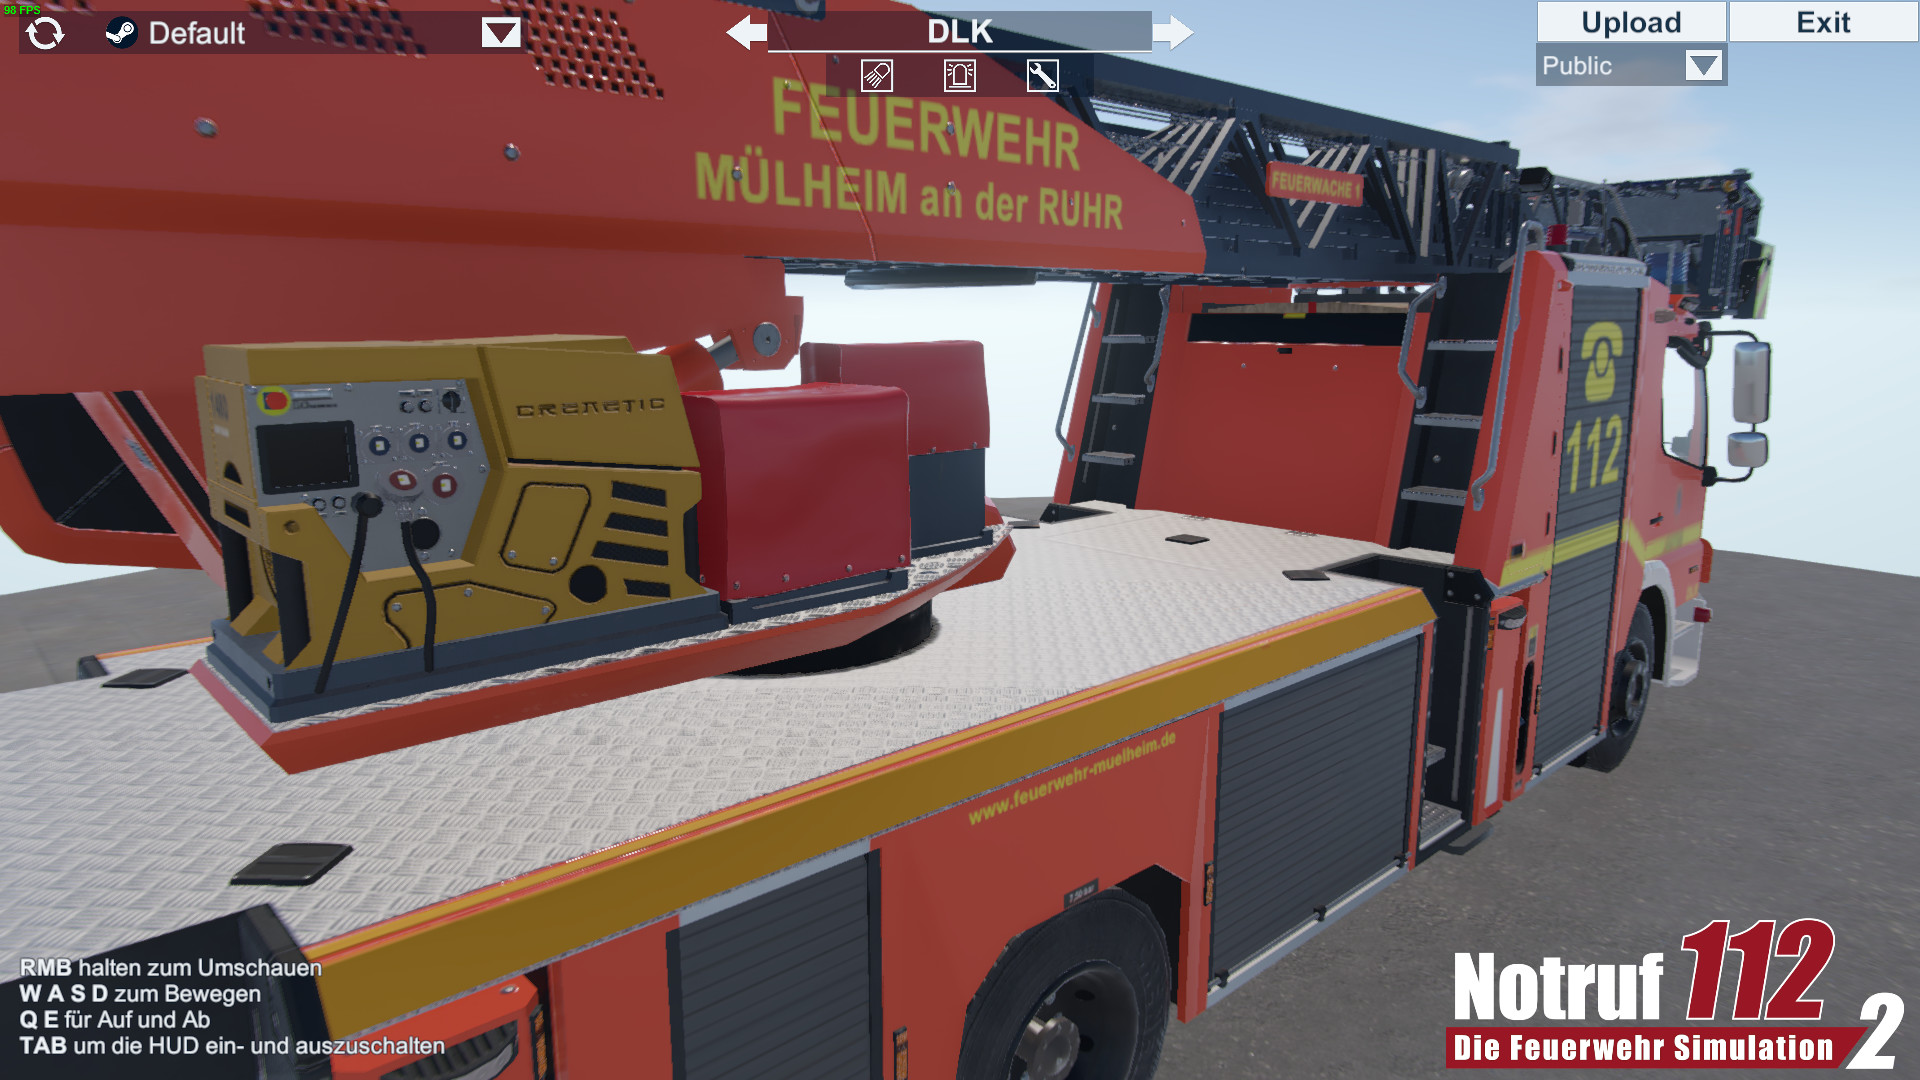 Notruf 112 - Die Feuerwehr Simulation 2: Showroom screenshot